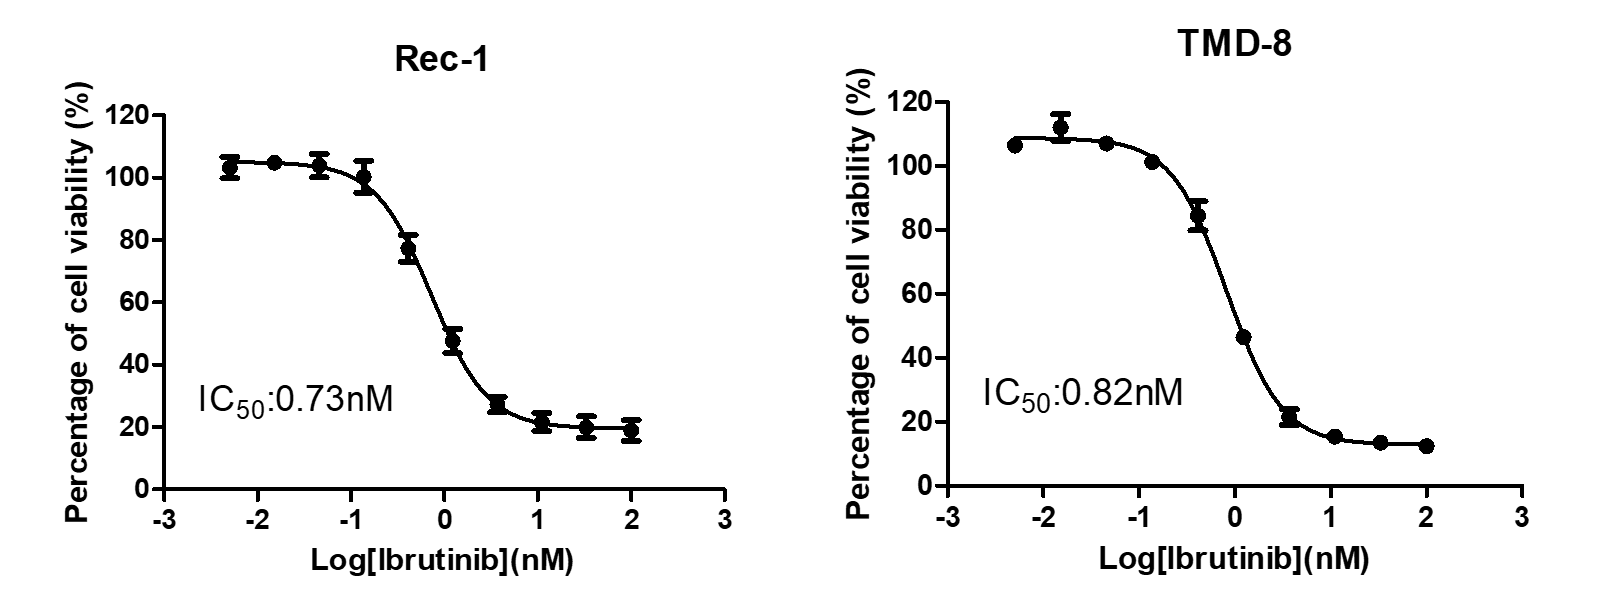 Ibrutinib抑制Rec-1和TMD-8细胞活力检测数据.png